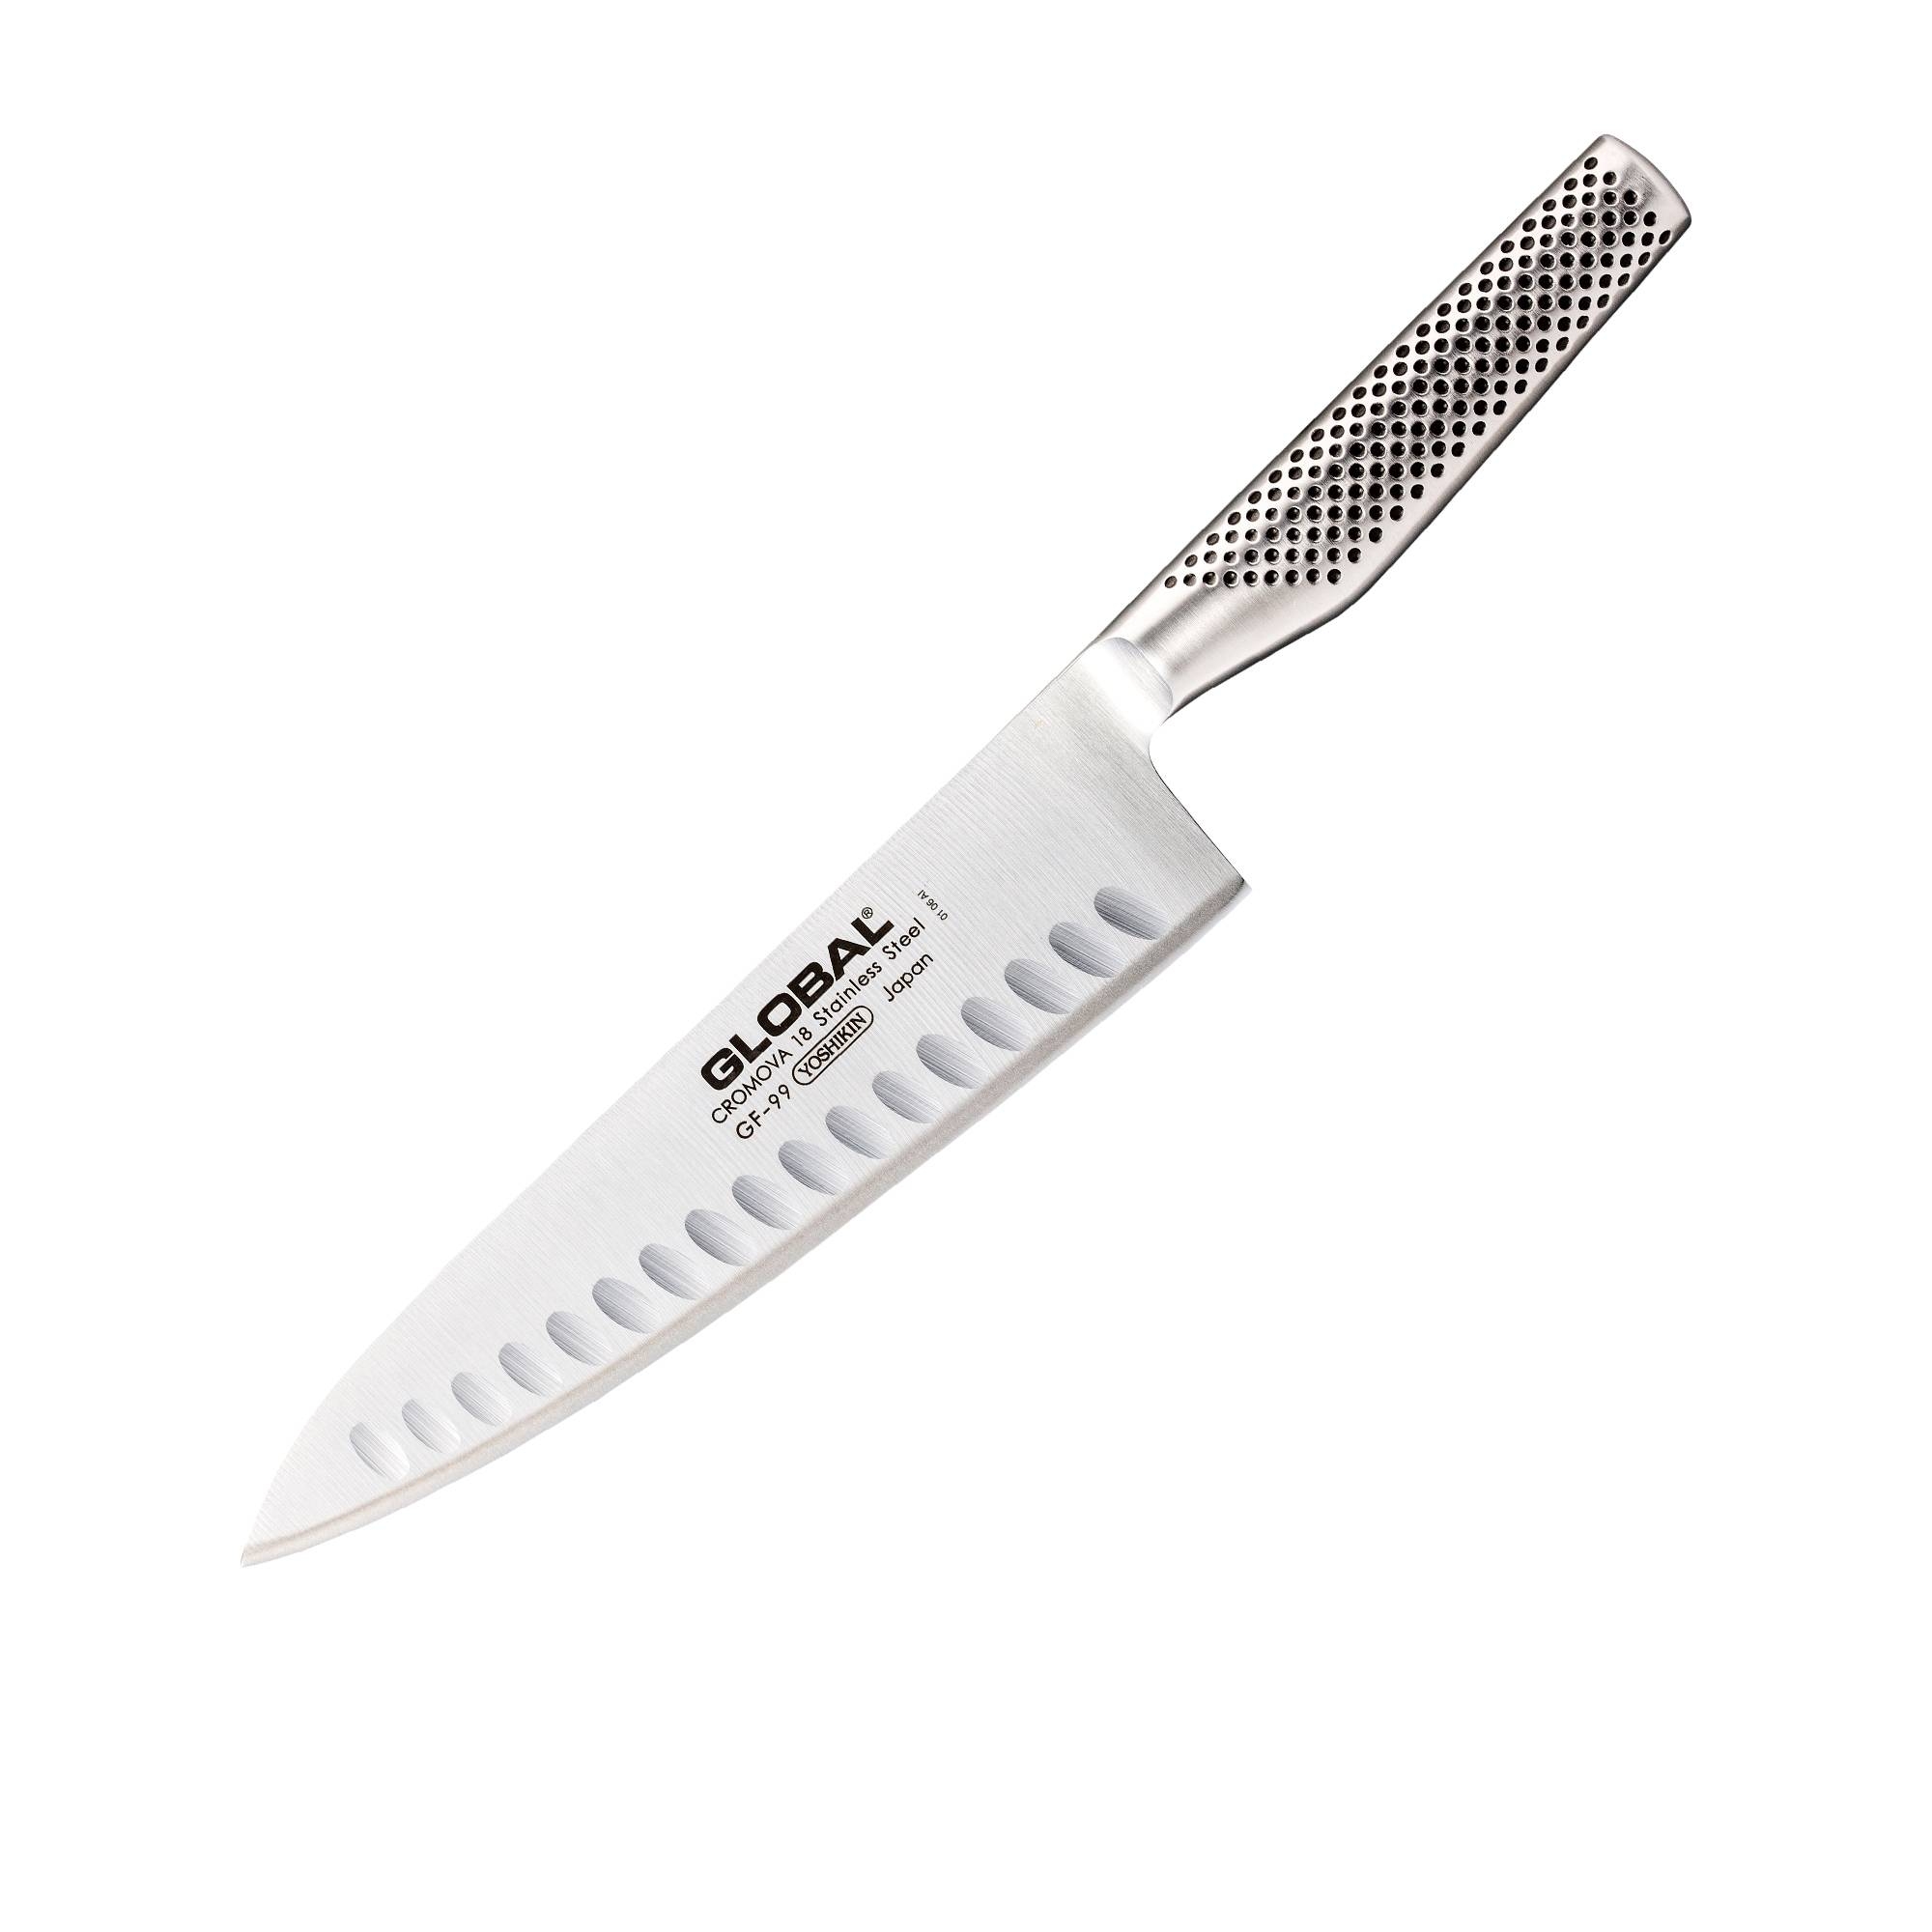 Global Model X Fluted Chef's Knife 20cm Image 1